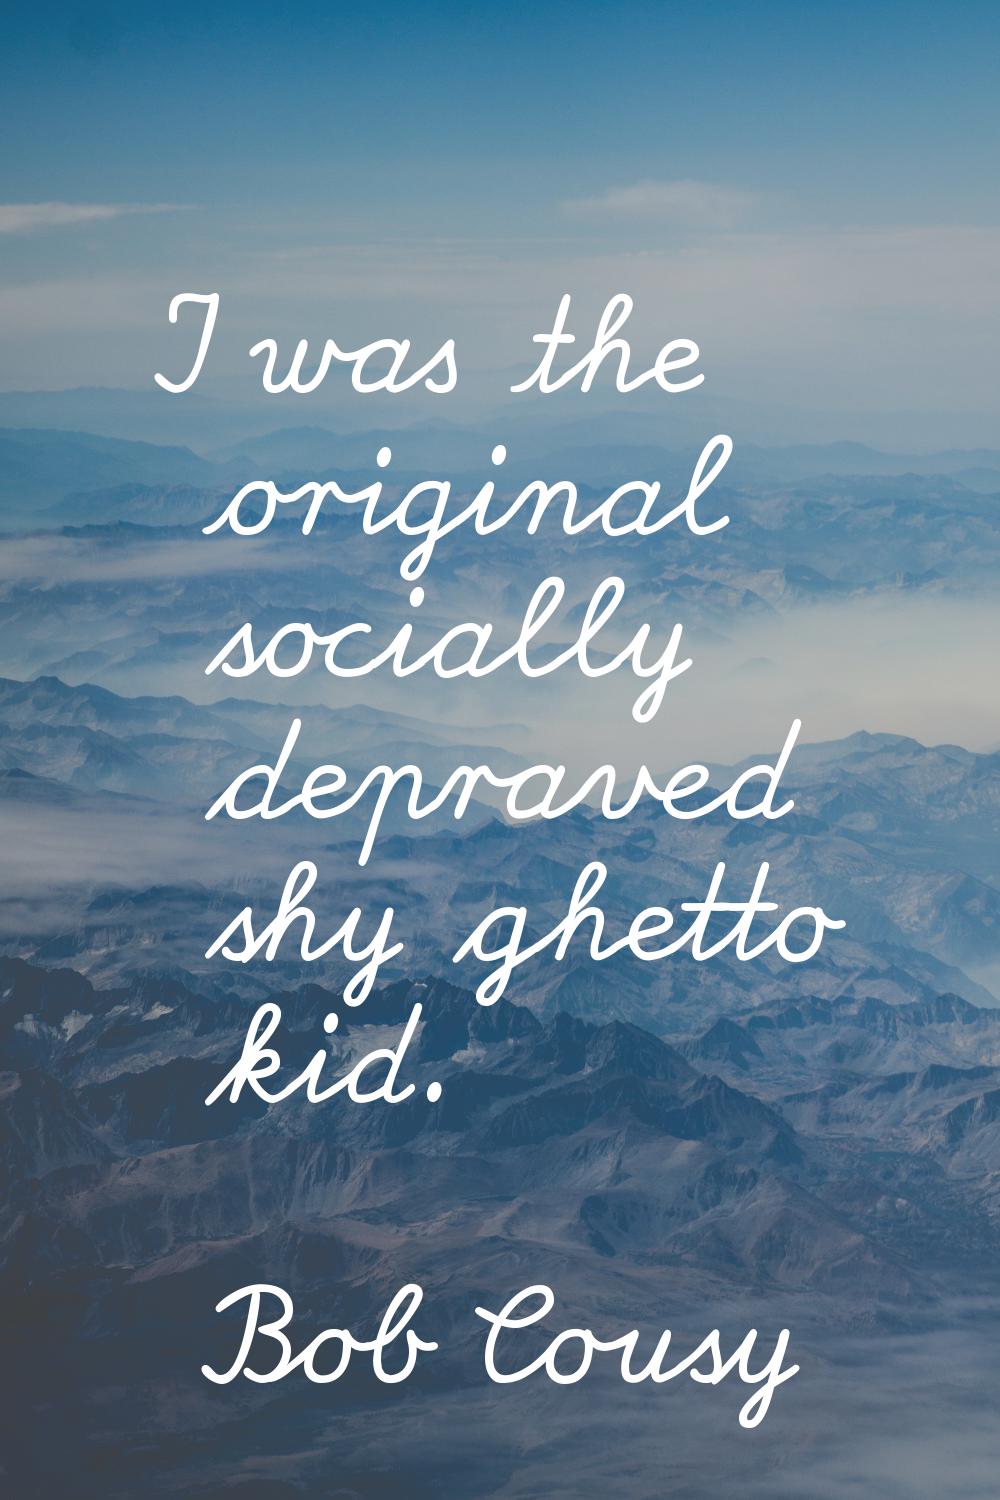 I was the original socially depraved shy ghetto kid.